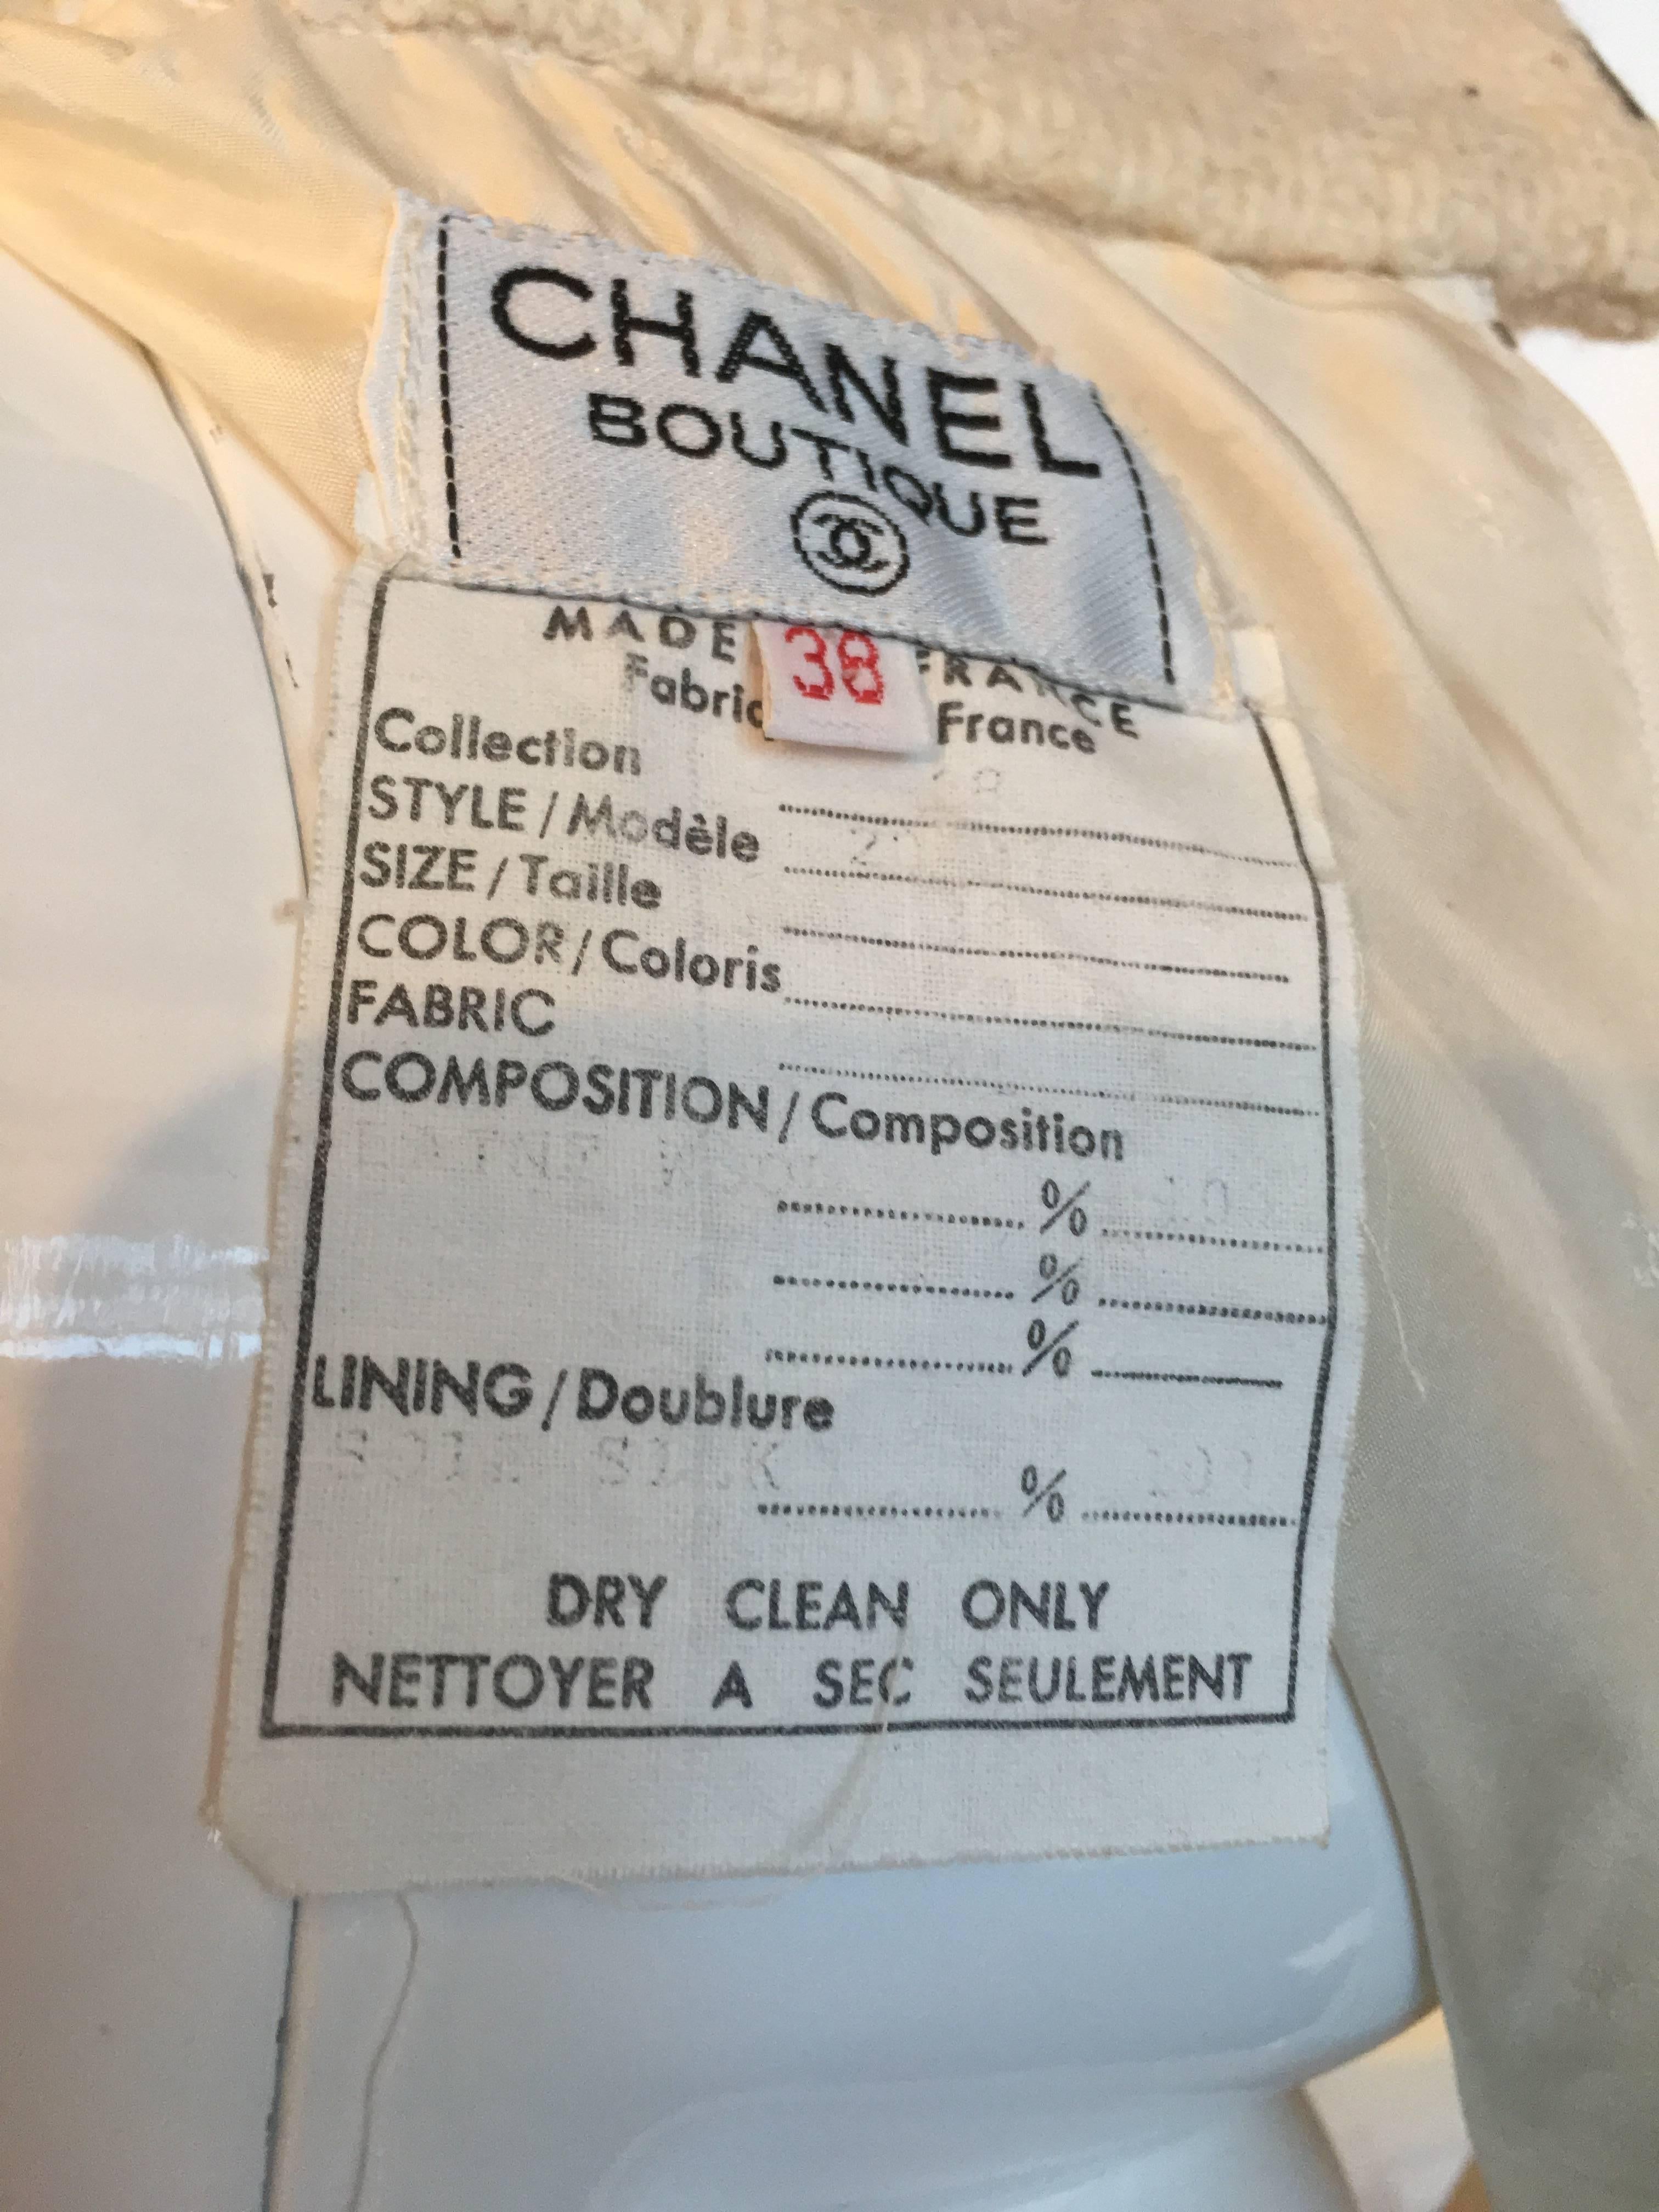 1980's Chanel Cream Colored Wool Tweed Skirt

Measurements - taken flat:
Waist: 13